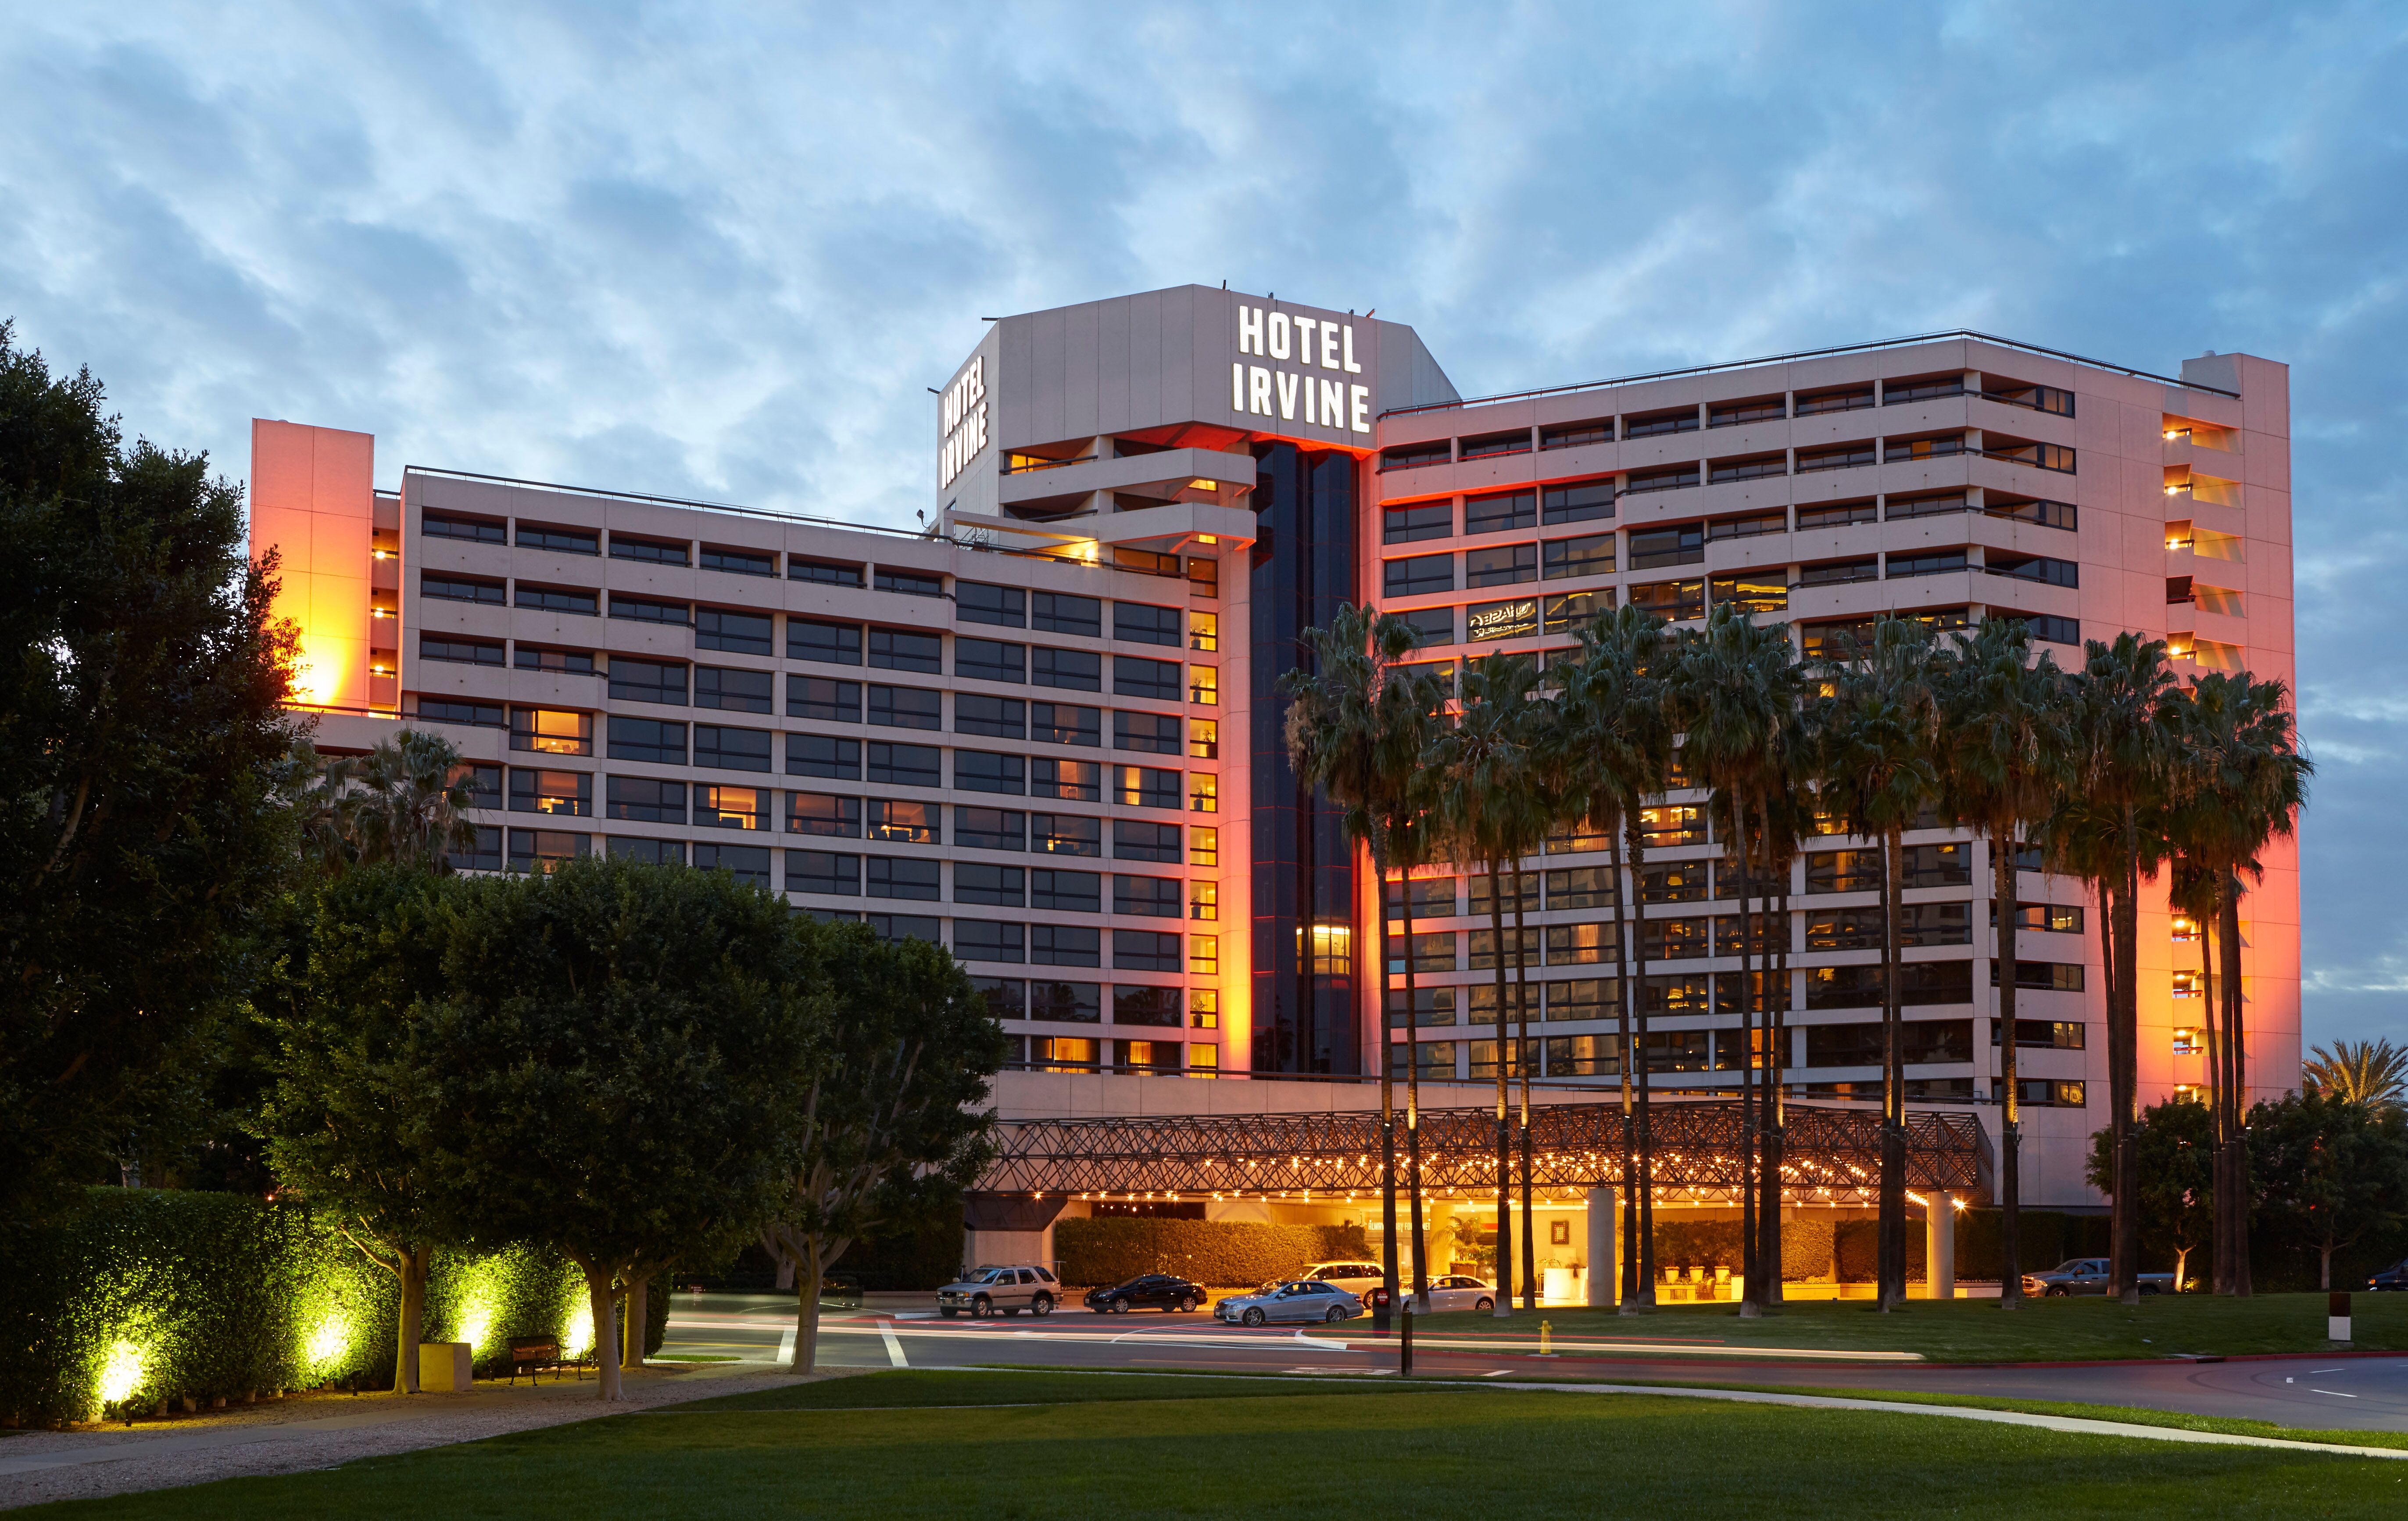 Hotel Irvine – An Ideal Venue in Orange County’s Urban Hub